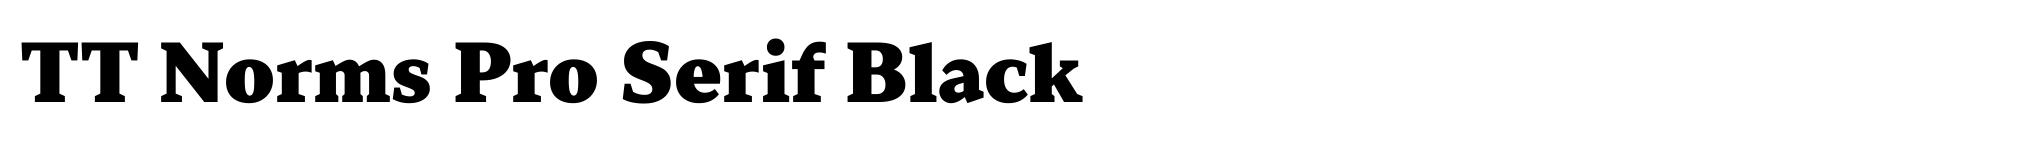 TT Norms Pro Serif Black image